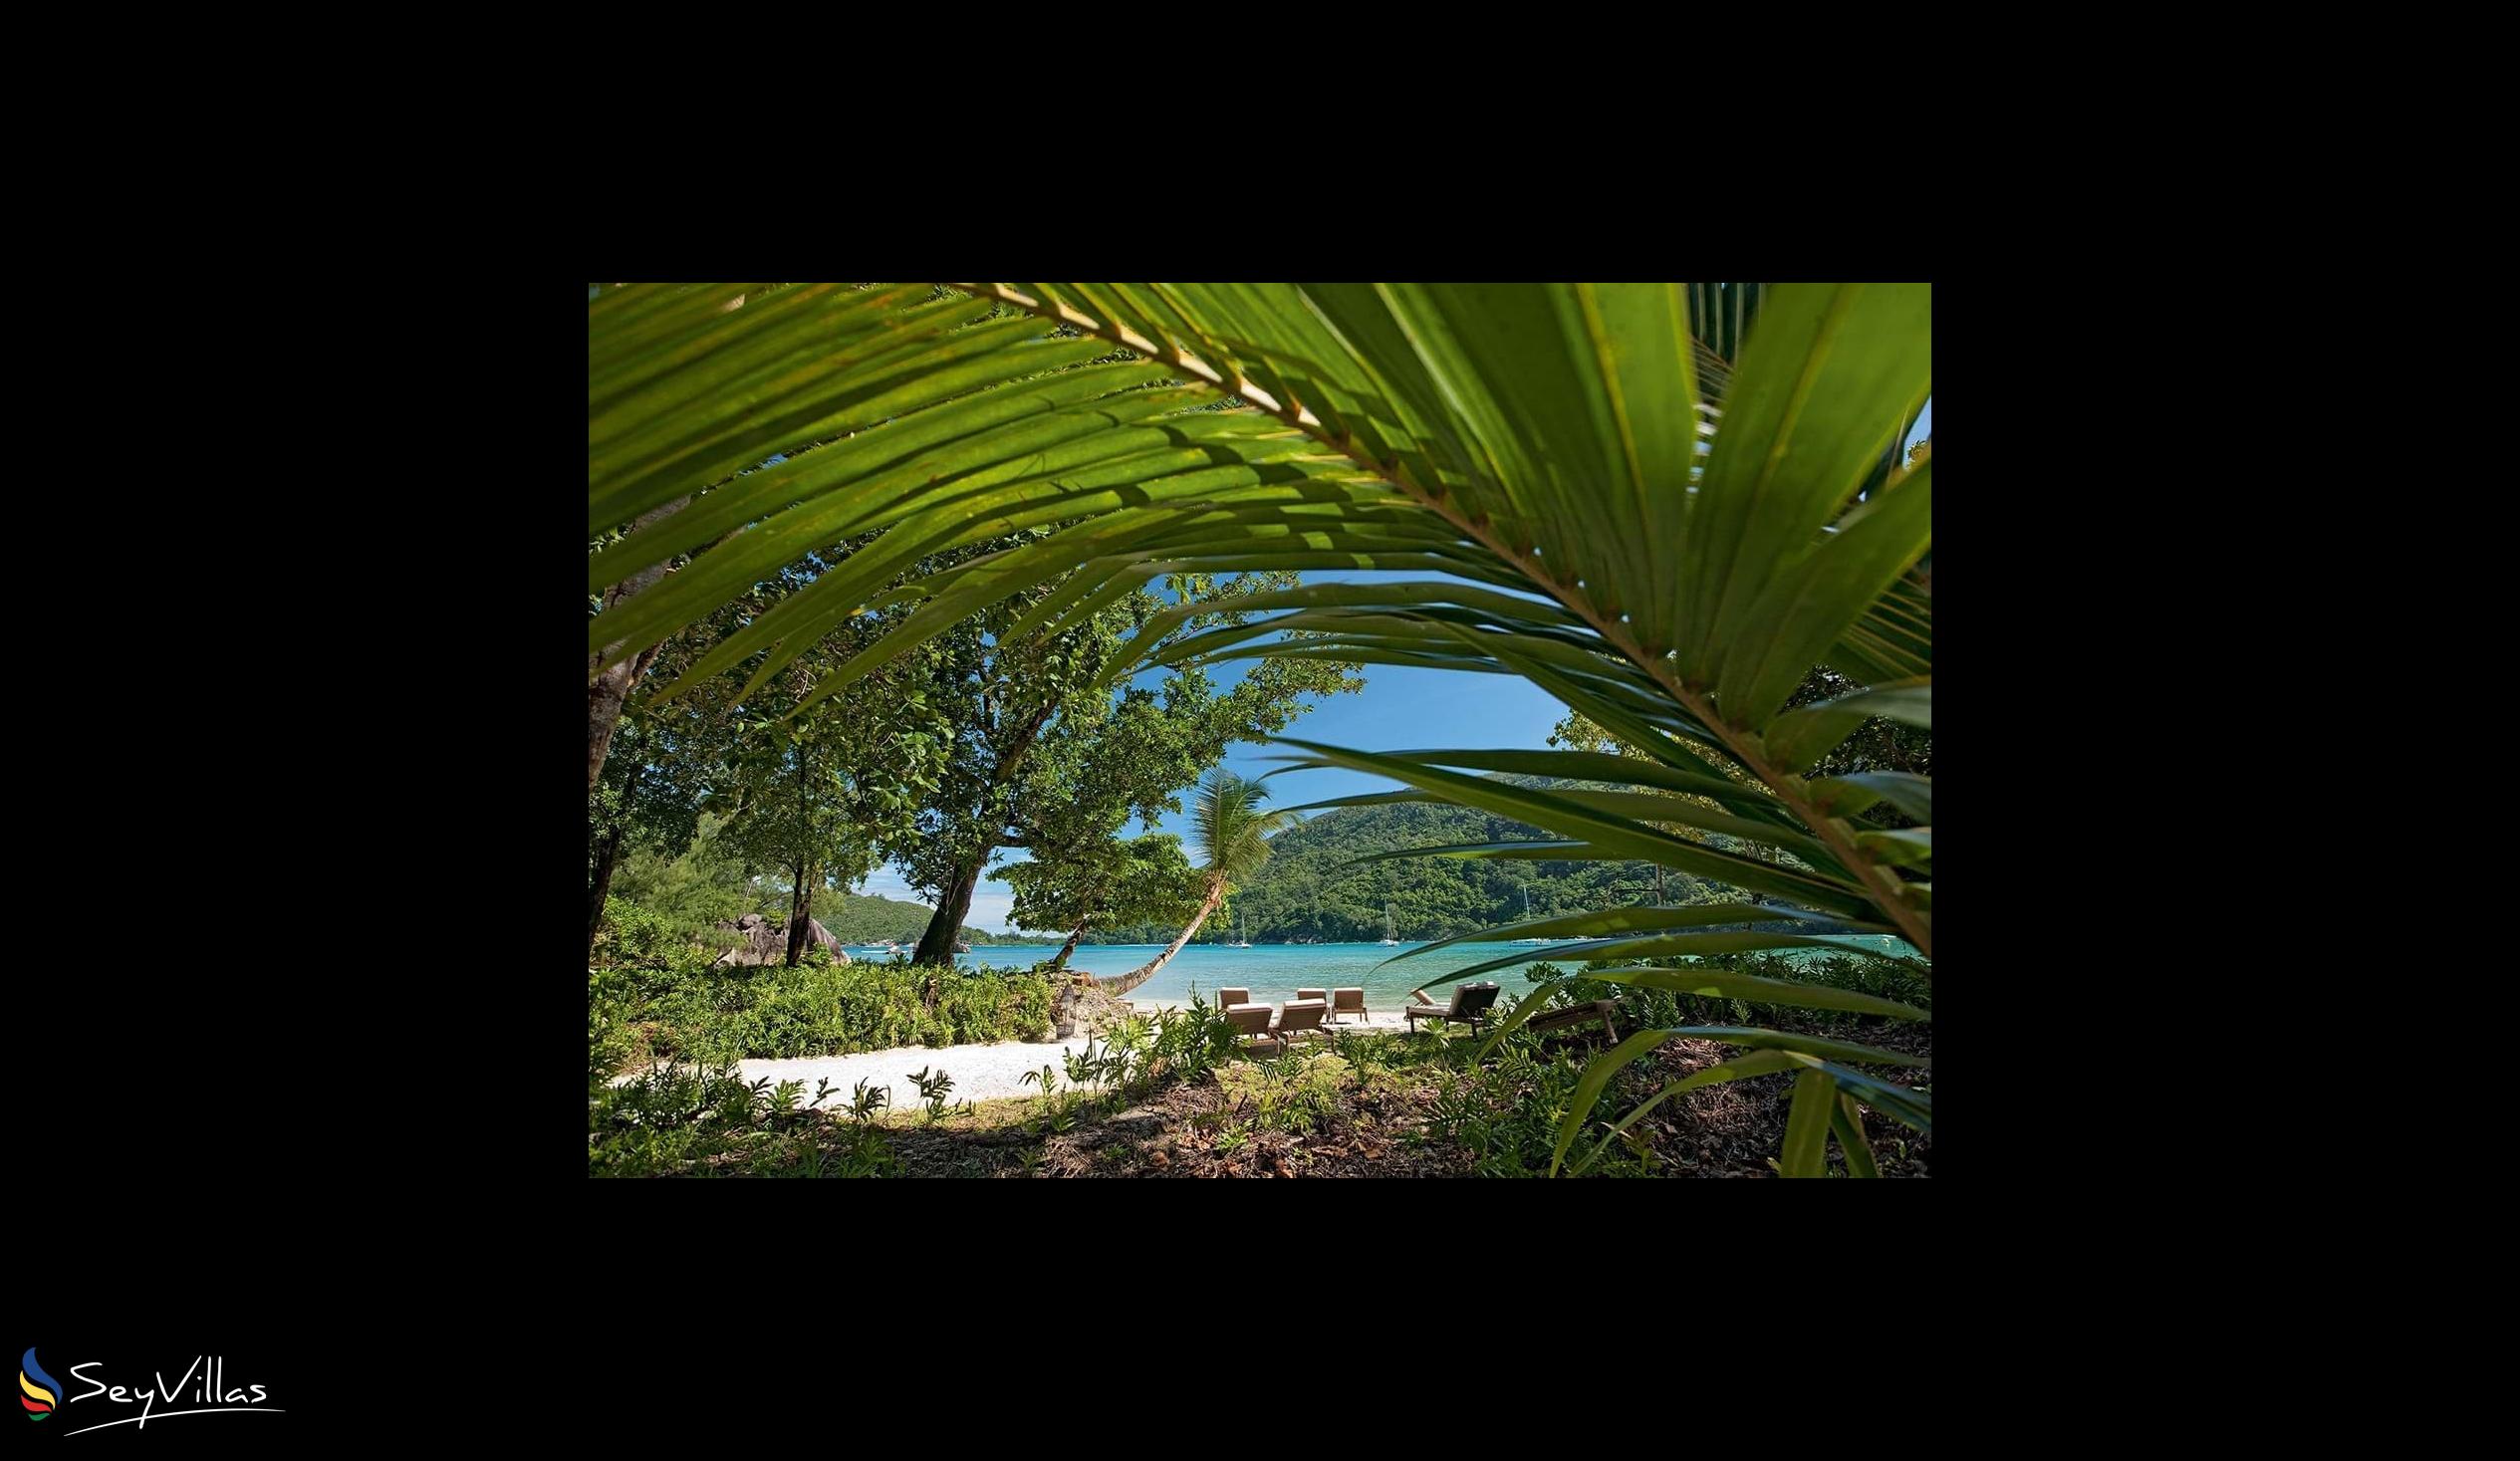 Photo 163: Constance Ephelia Seychelles - Location - Mahé (Seychelles)